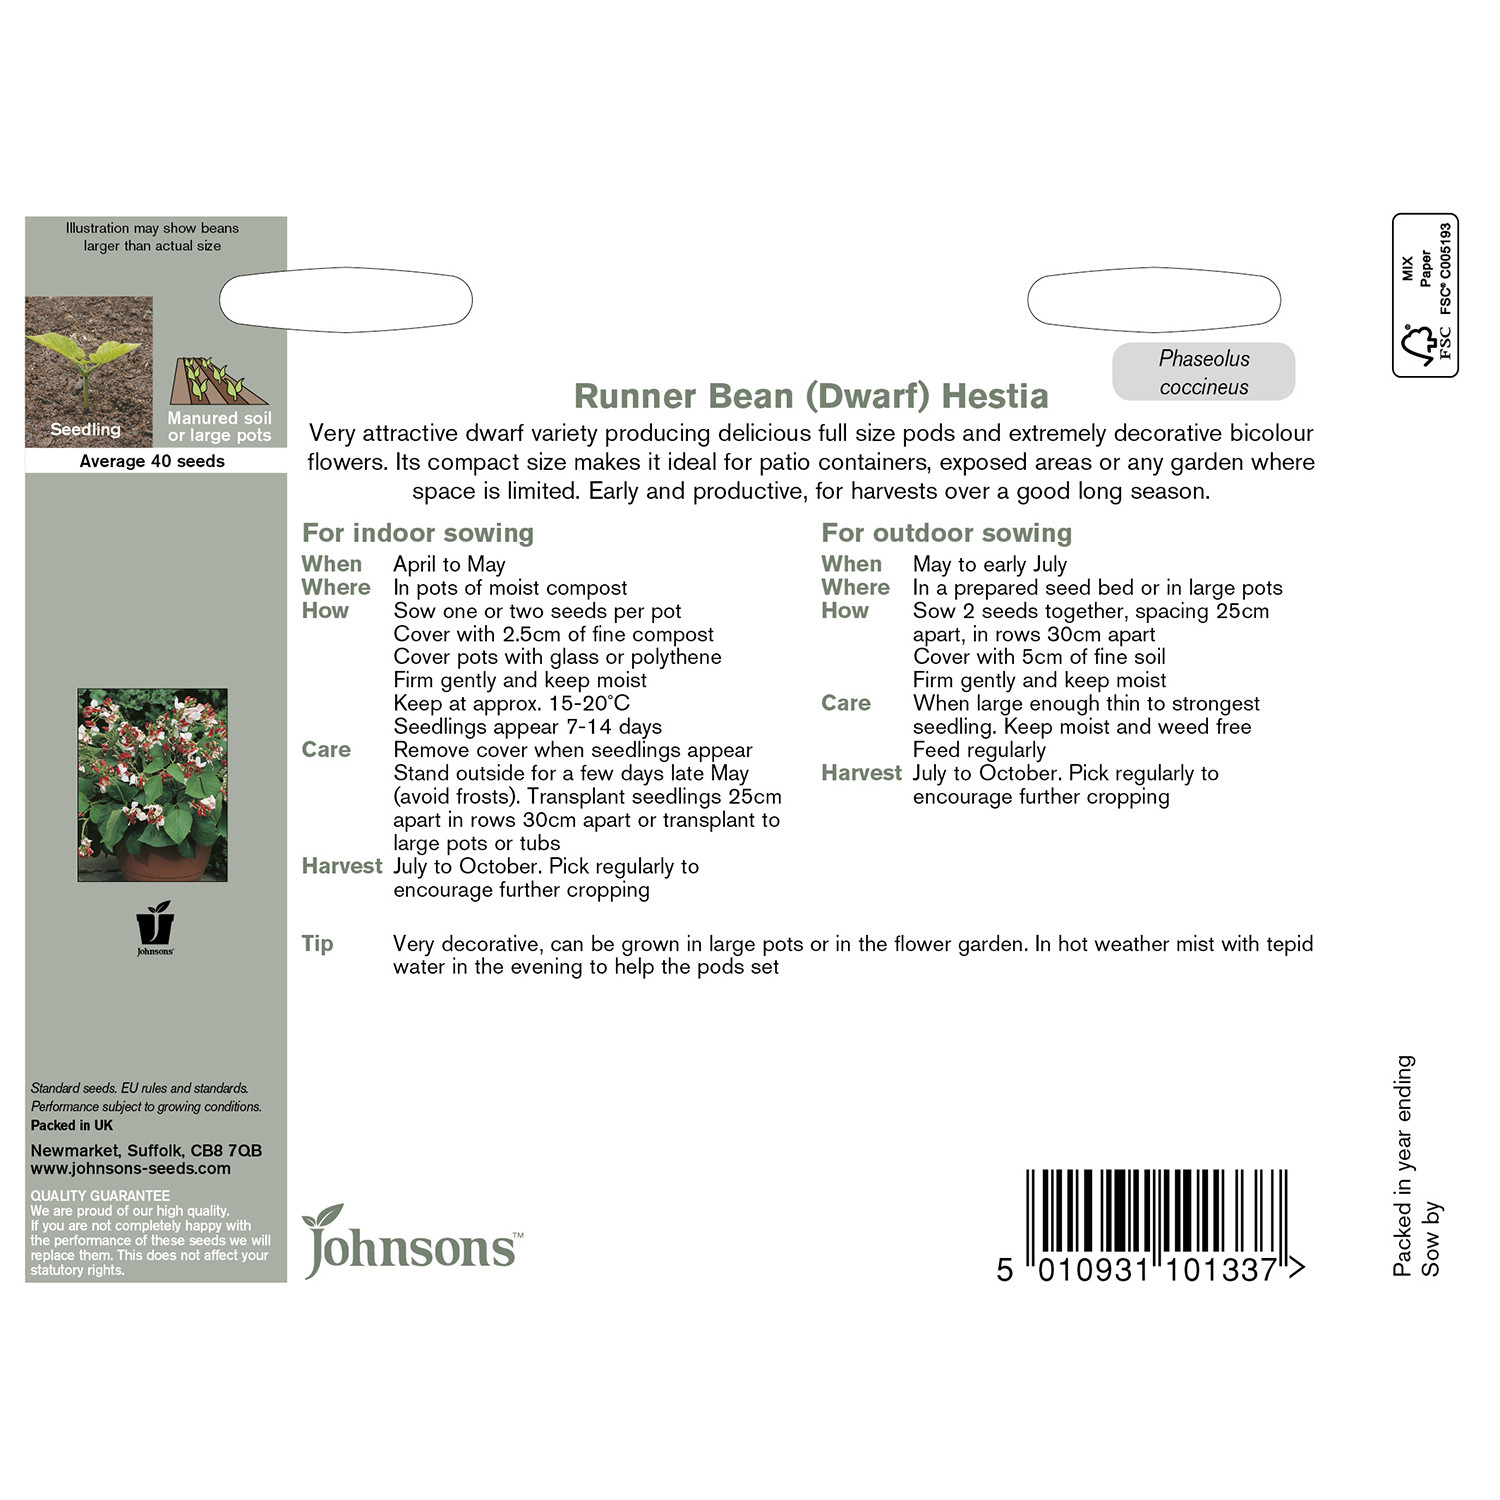 Pack of Dwarf Hestia Runner Bean Seeds Image 2